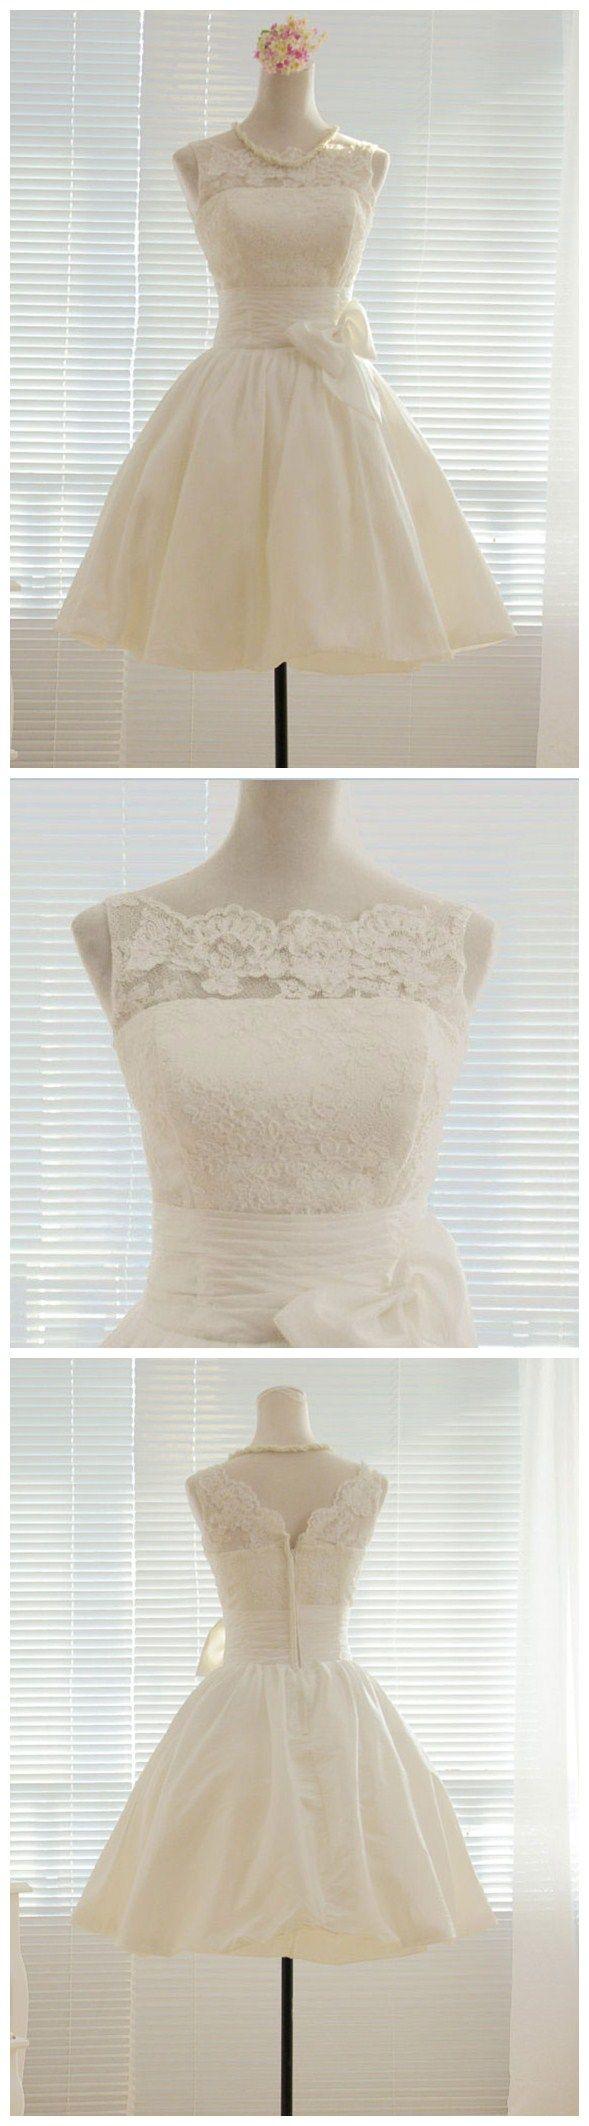 Mariage - Princess Ivory Lace And Taffeta Short Wedding Dress,Little White Dress,apd0115